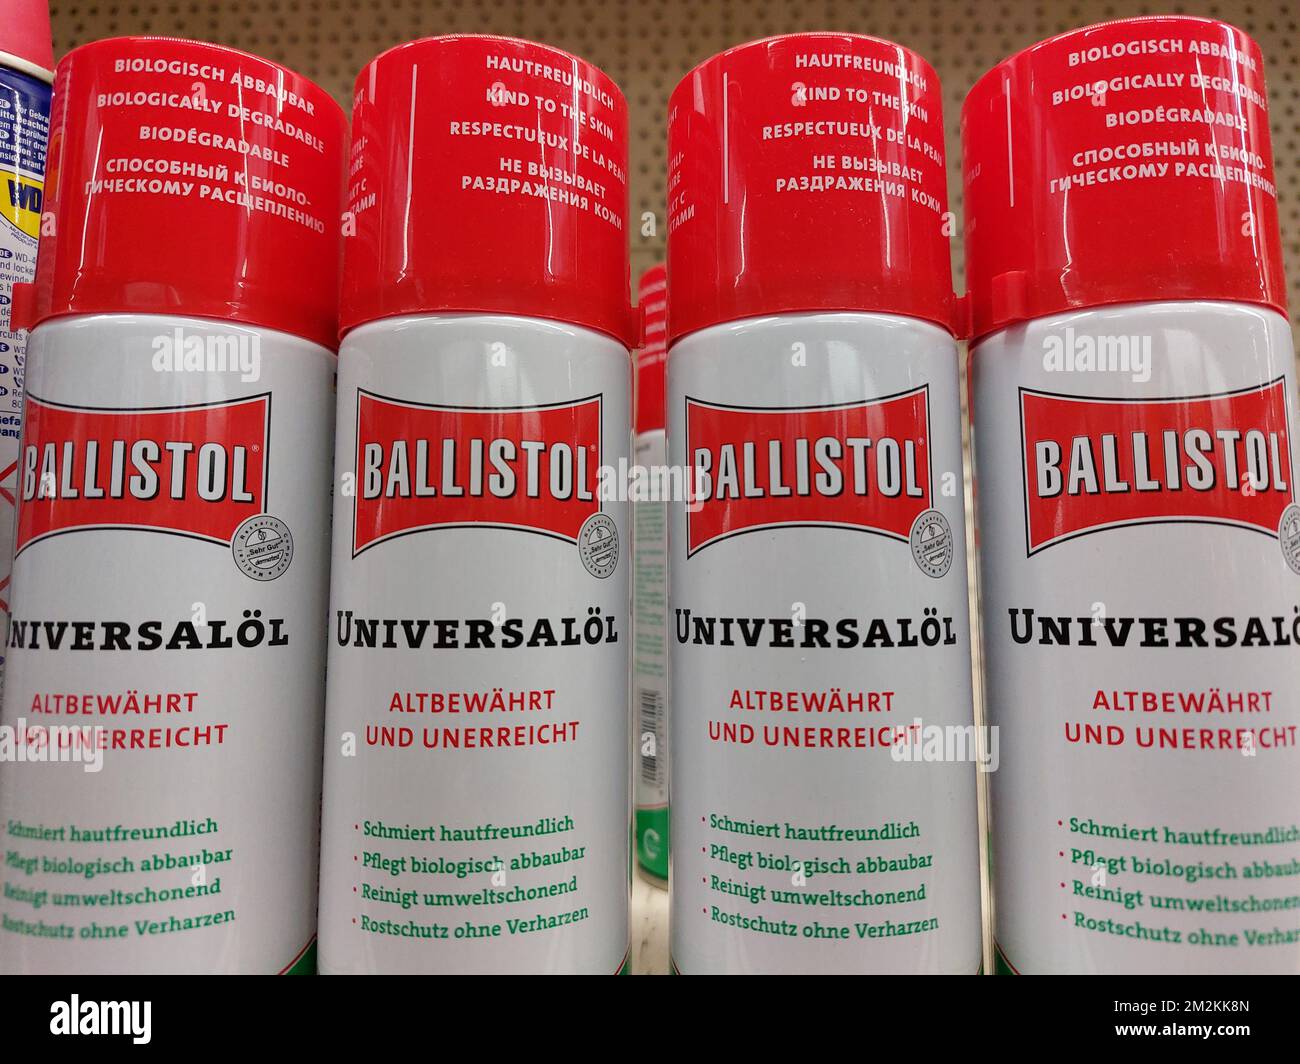 Ballistol universal oil spray cans Stock Photo - Alamy